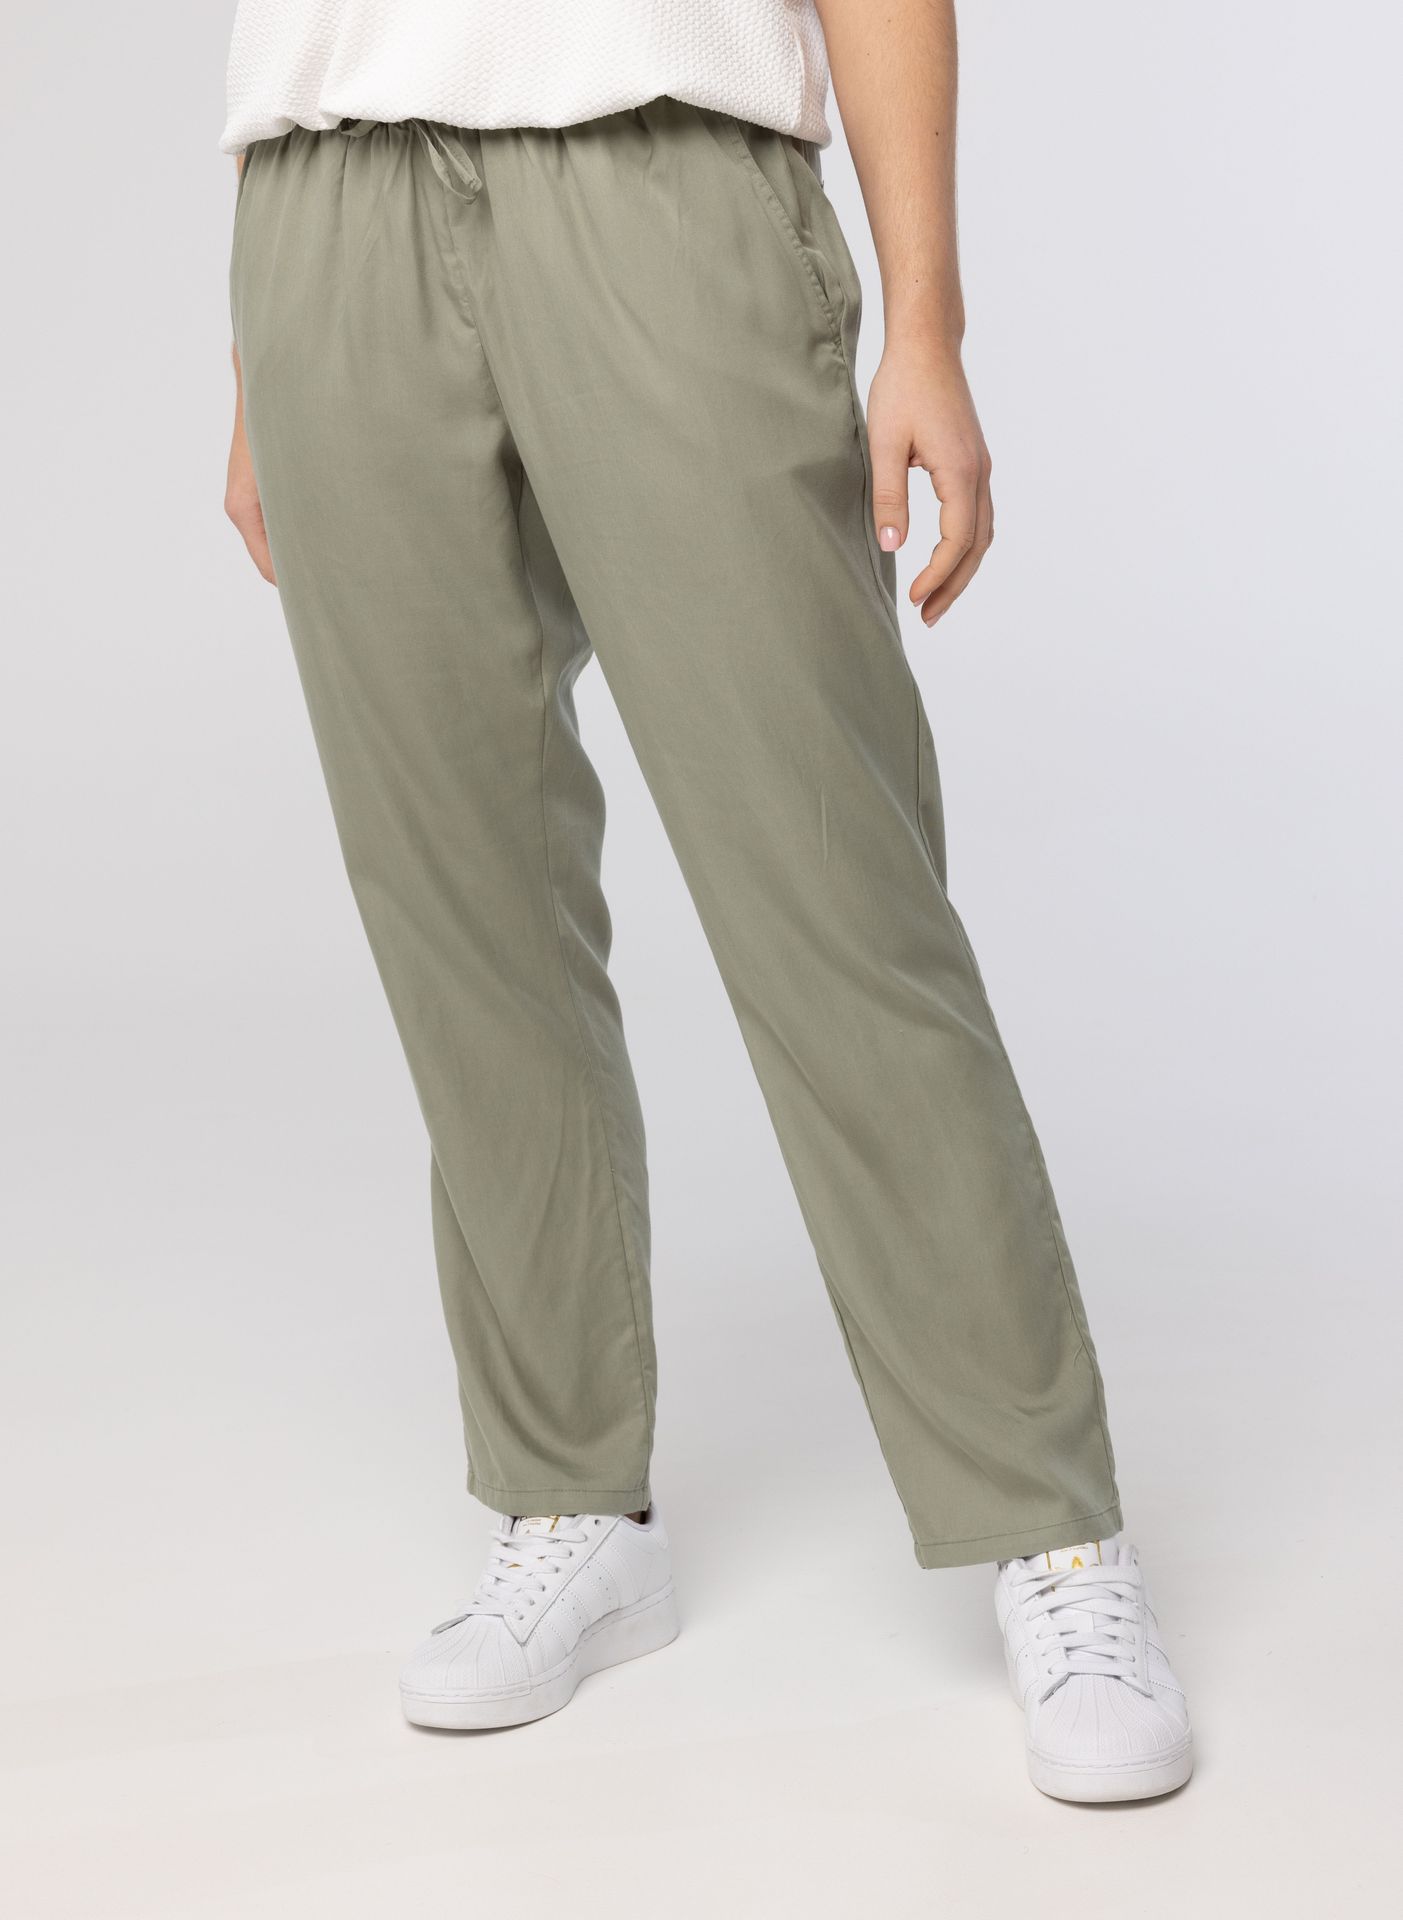 Norah Grijs groene pantalon green/grey 212478-540